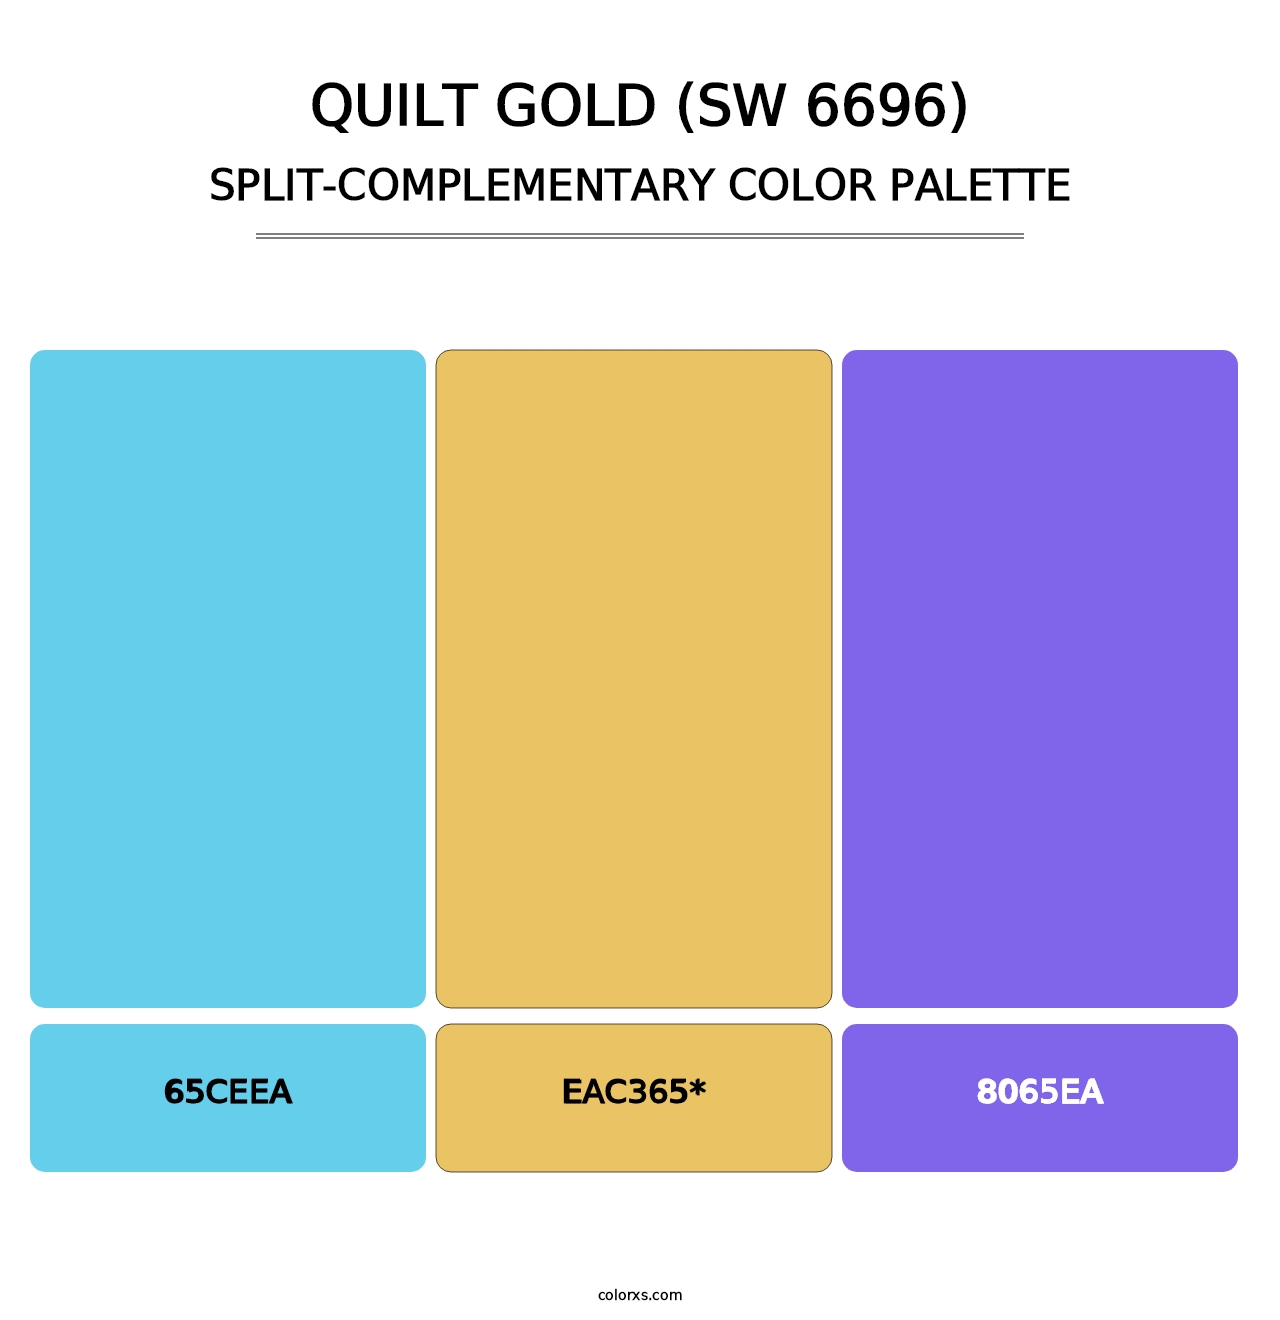 Quilt Gold (SW 6696) - Split-Complementary Color Palette